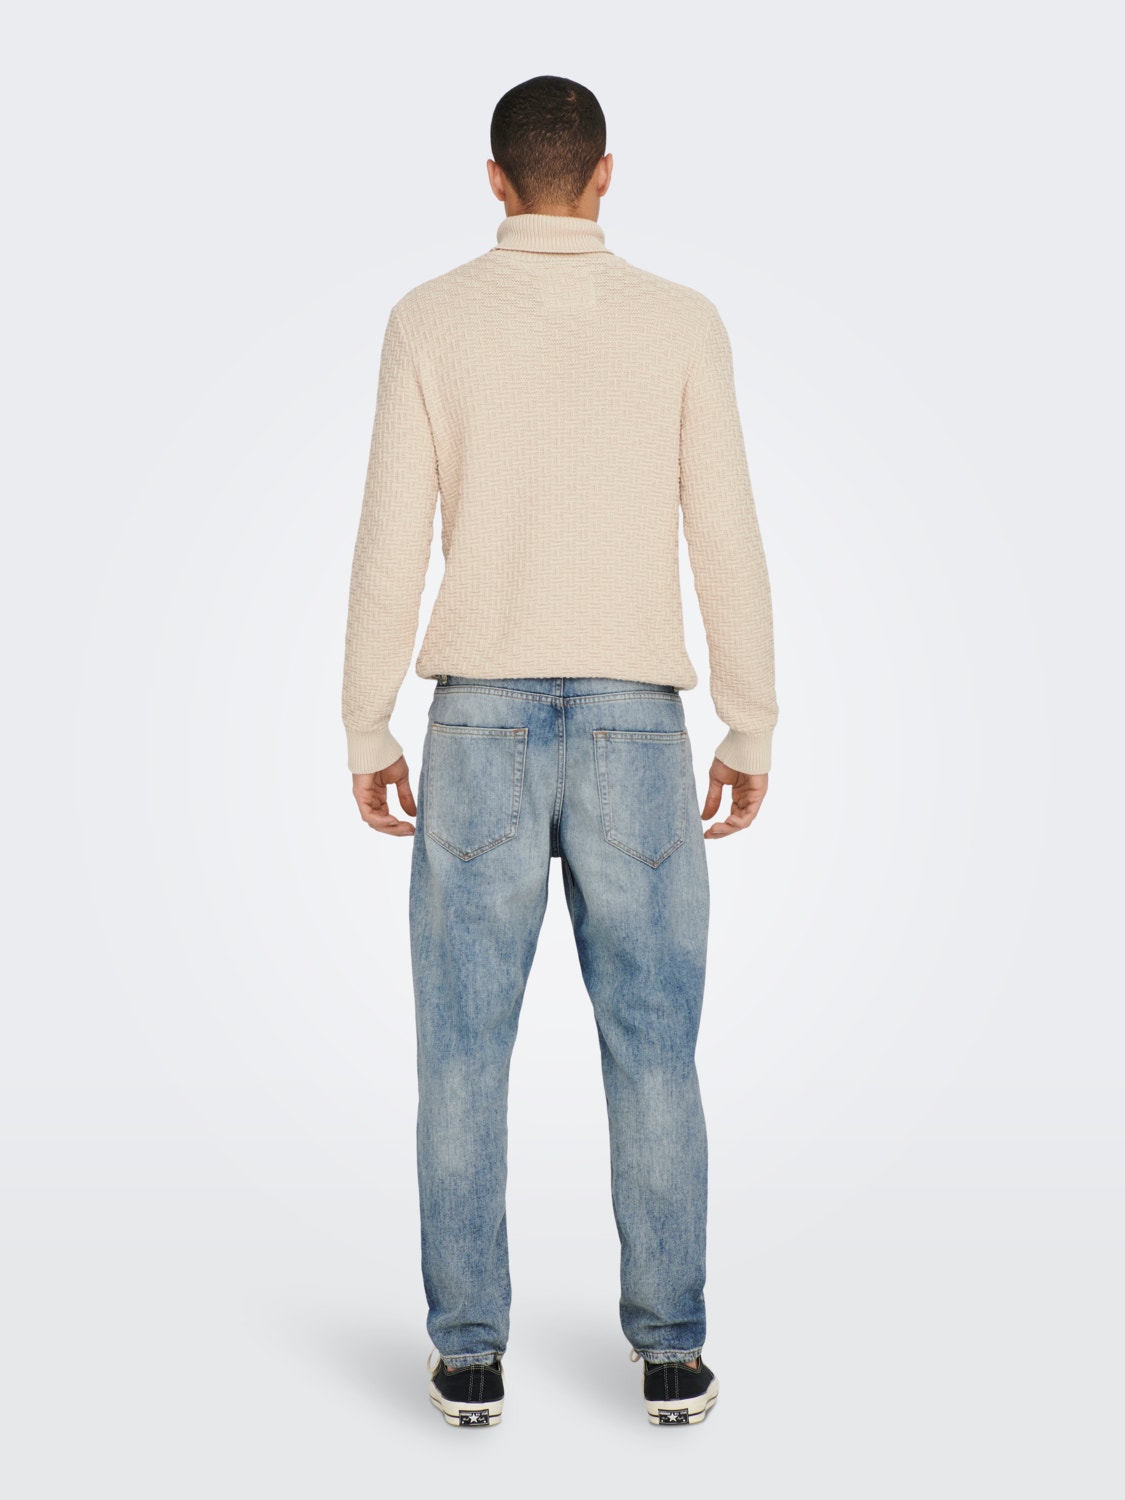 ONLY & SONS Cropped fit Mid waist Versleten zoom Jeans -Blue Denim - 22023149